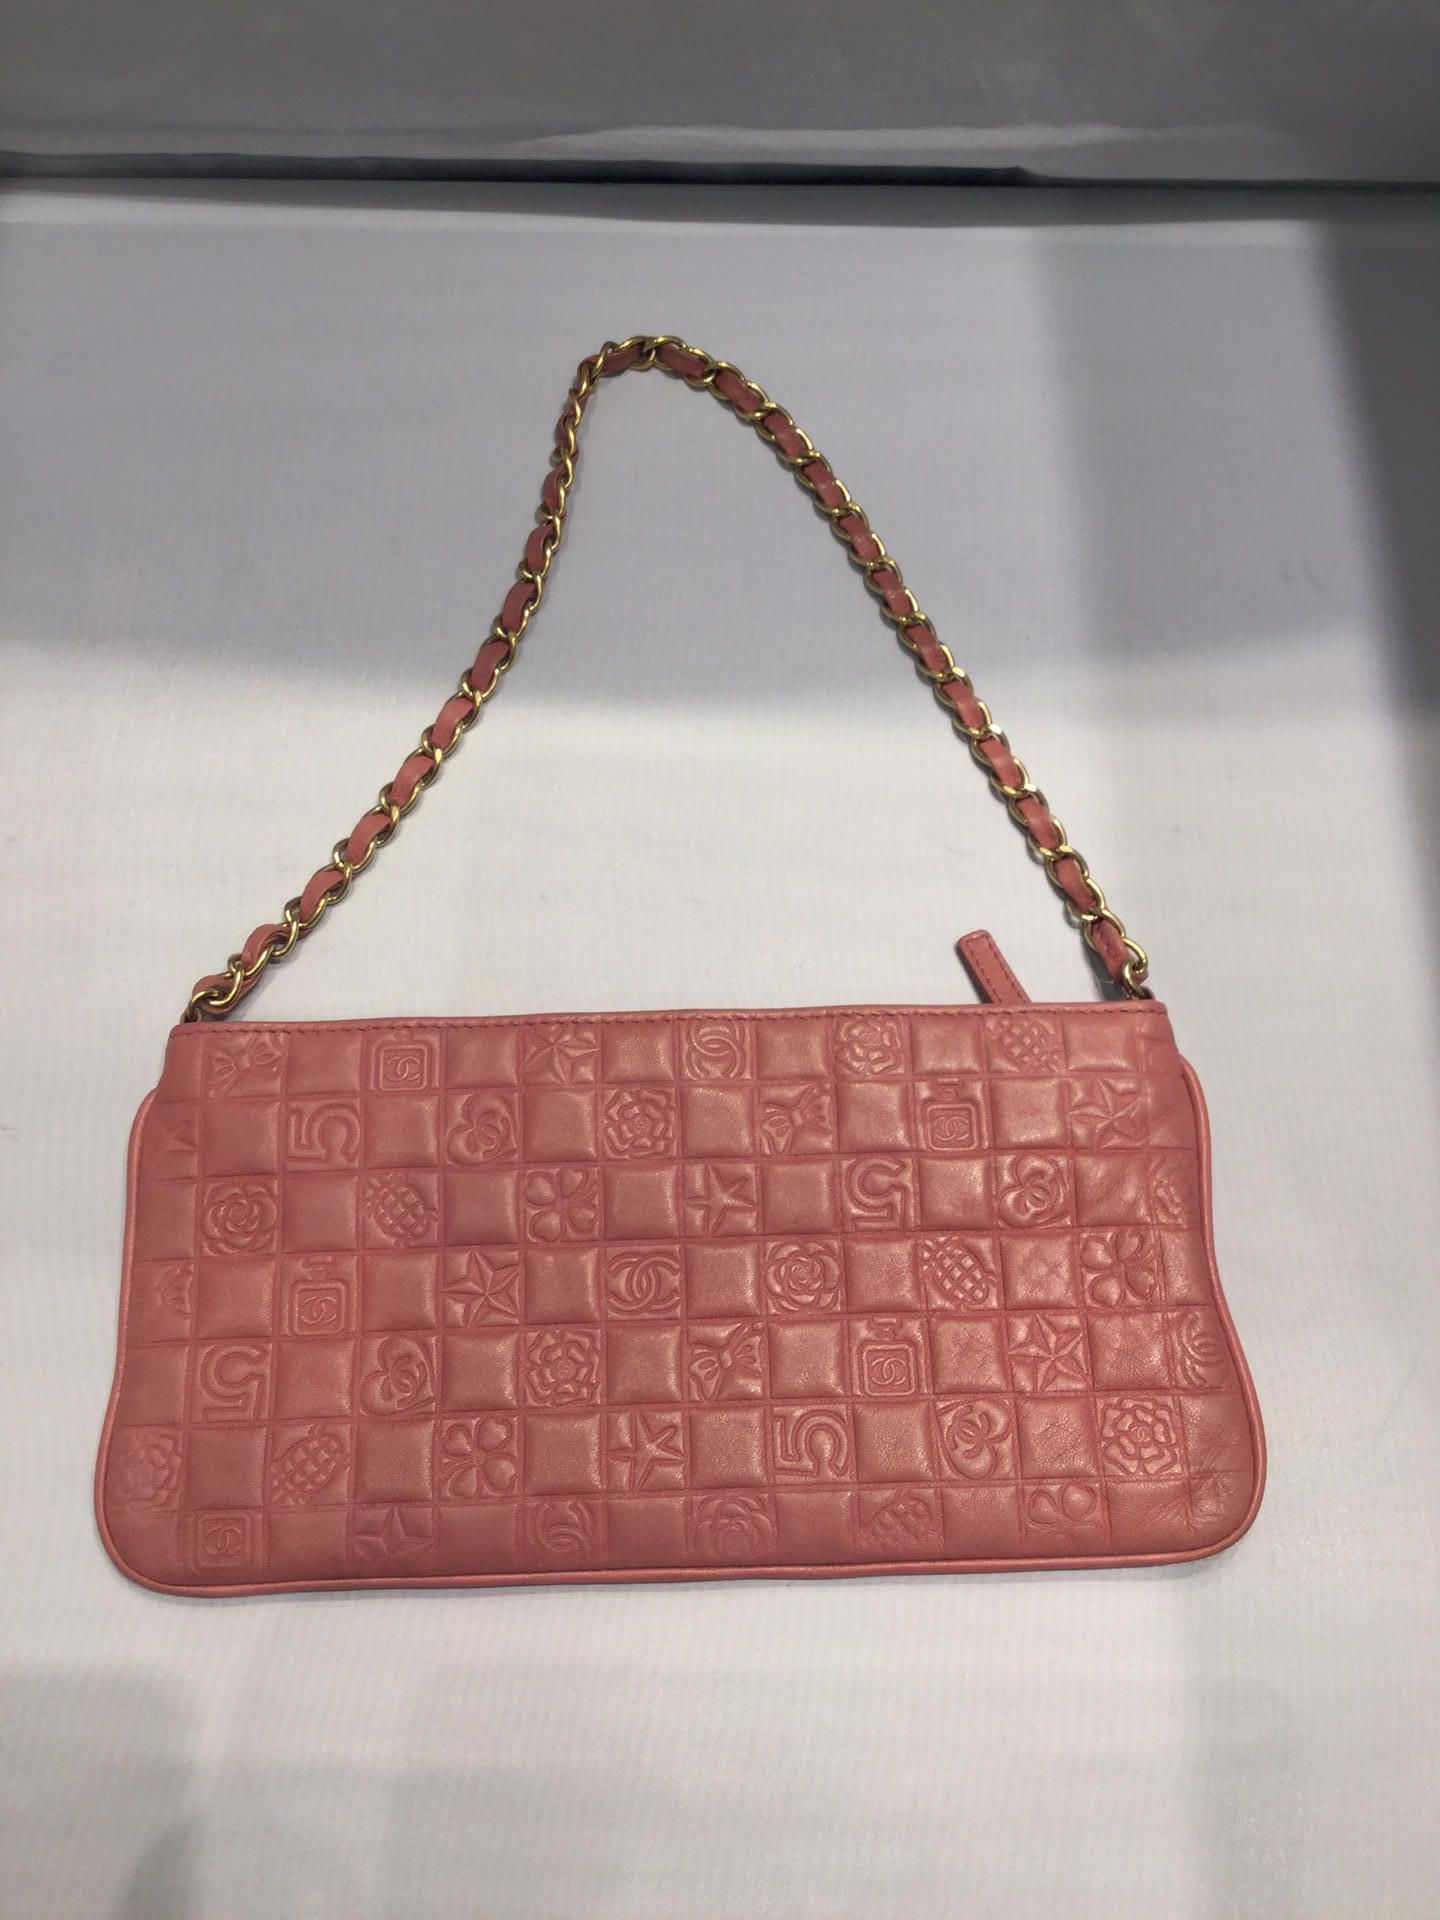 Chanel Leather Printed Pink Vintage Clutch Bag - Image 2 of 3